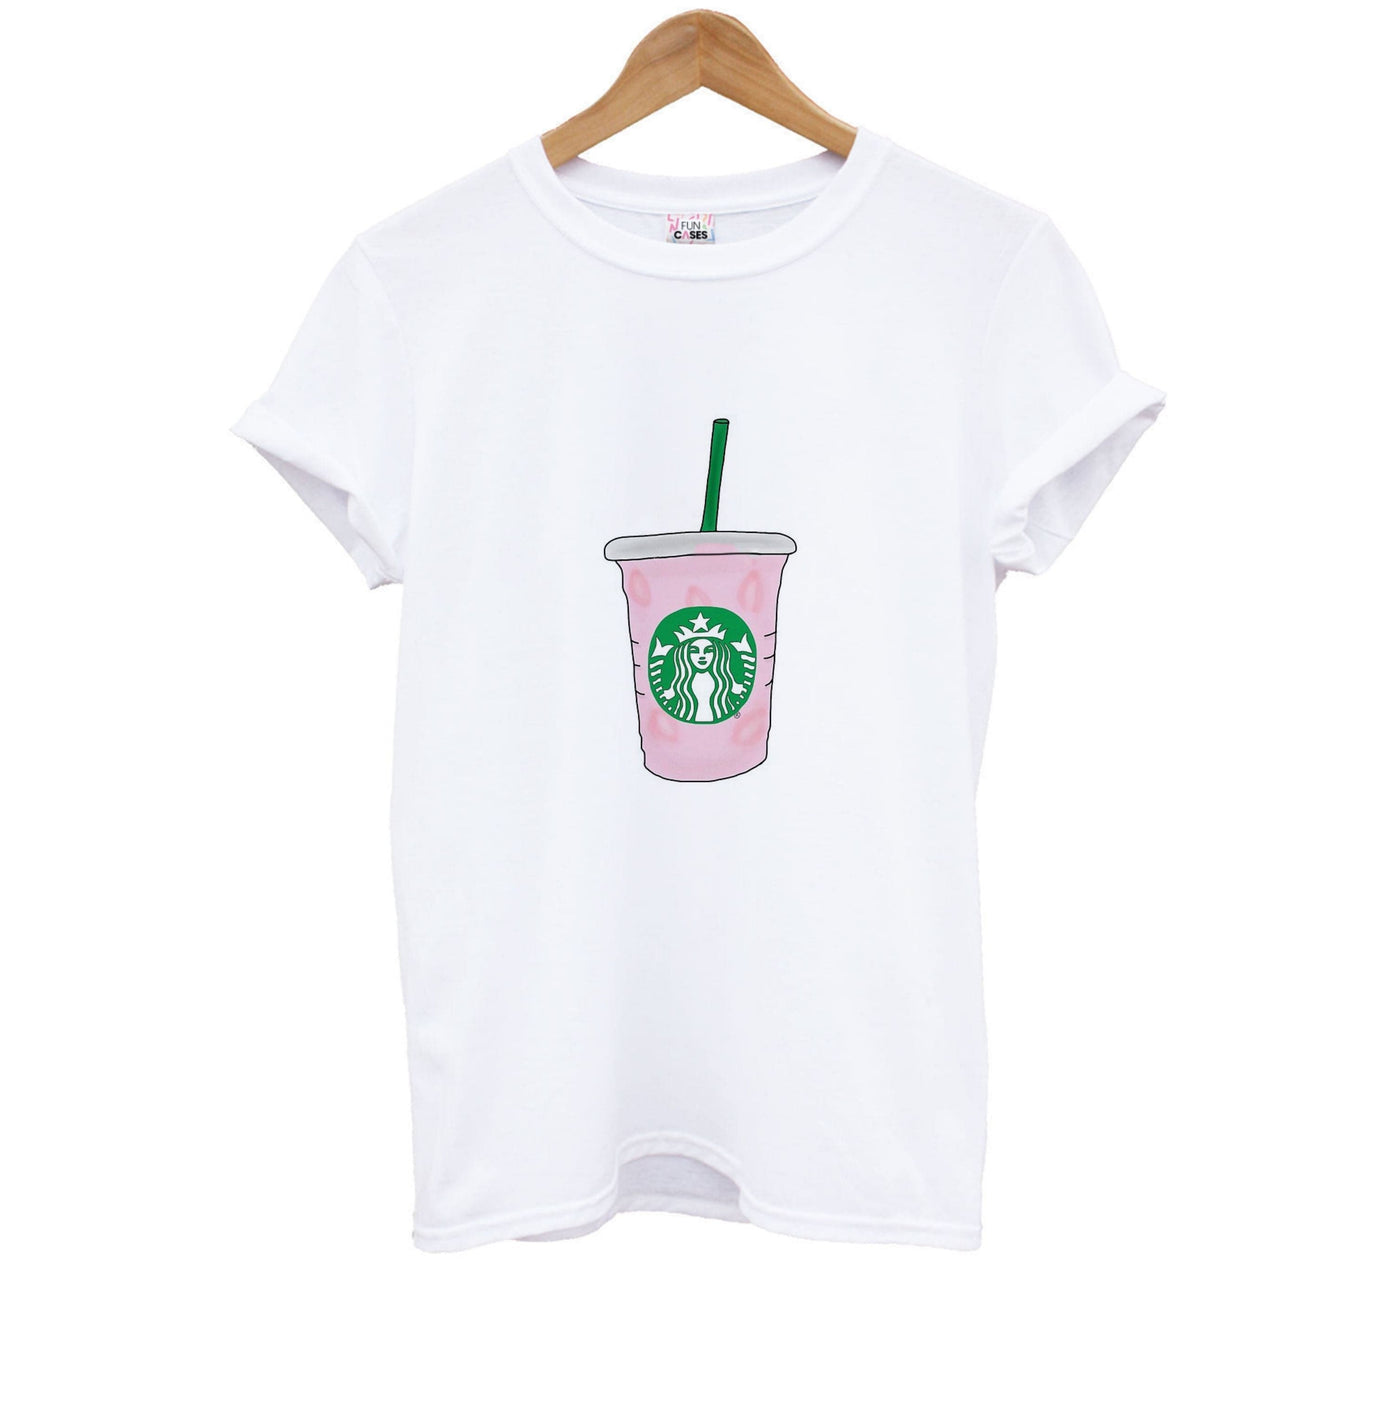 Starbuck Pinkity Drinkity - James Charles Kids T-Shirt